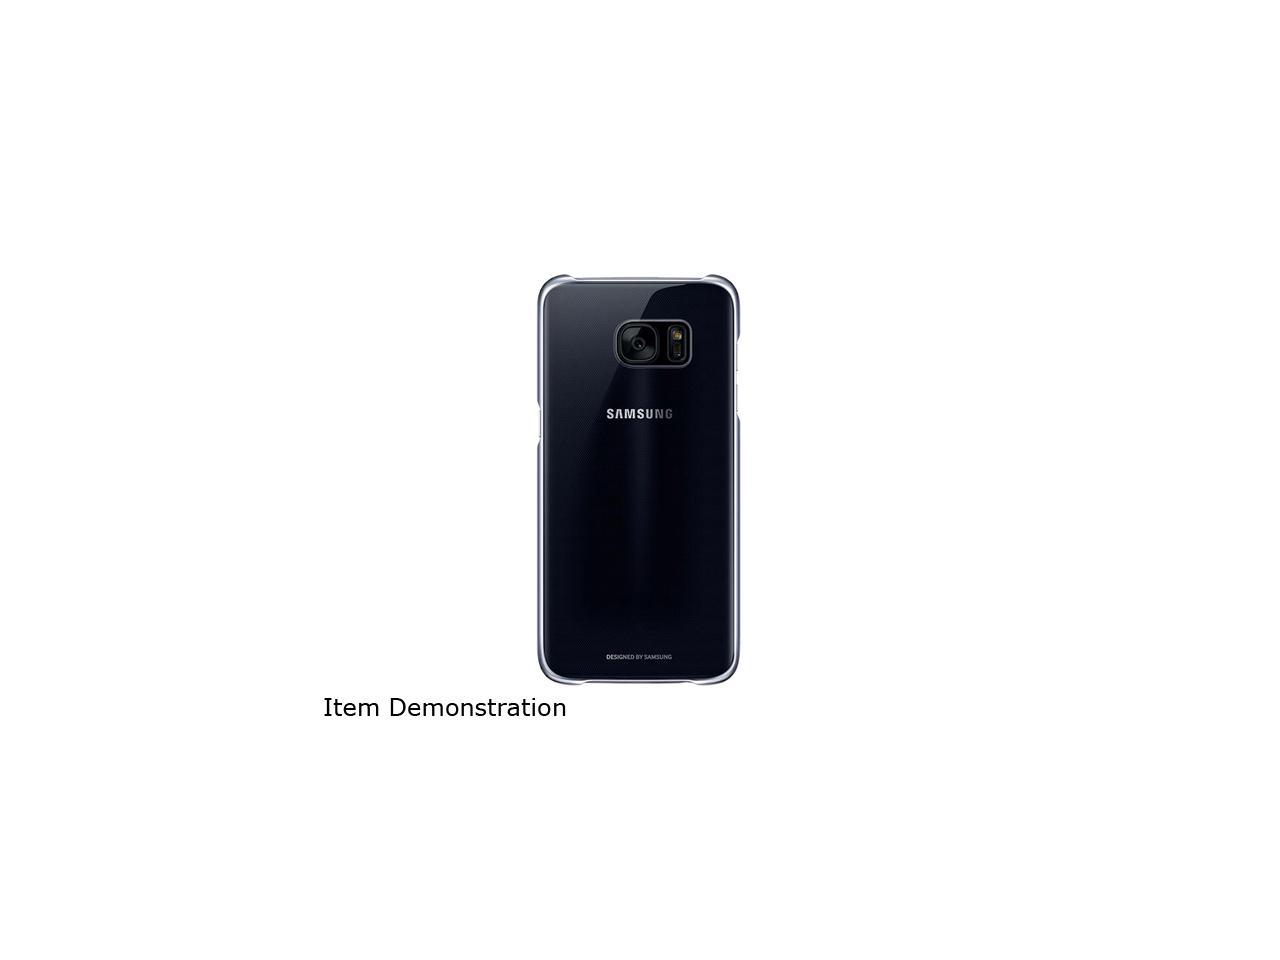 Samsung Galaxy S7 Edge Protective Cover Clear Black - EF-QG935CBEGUS